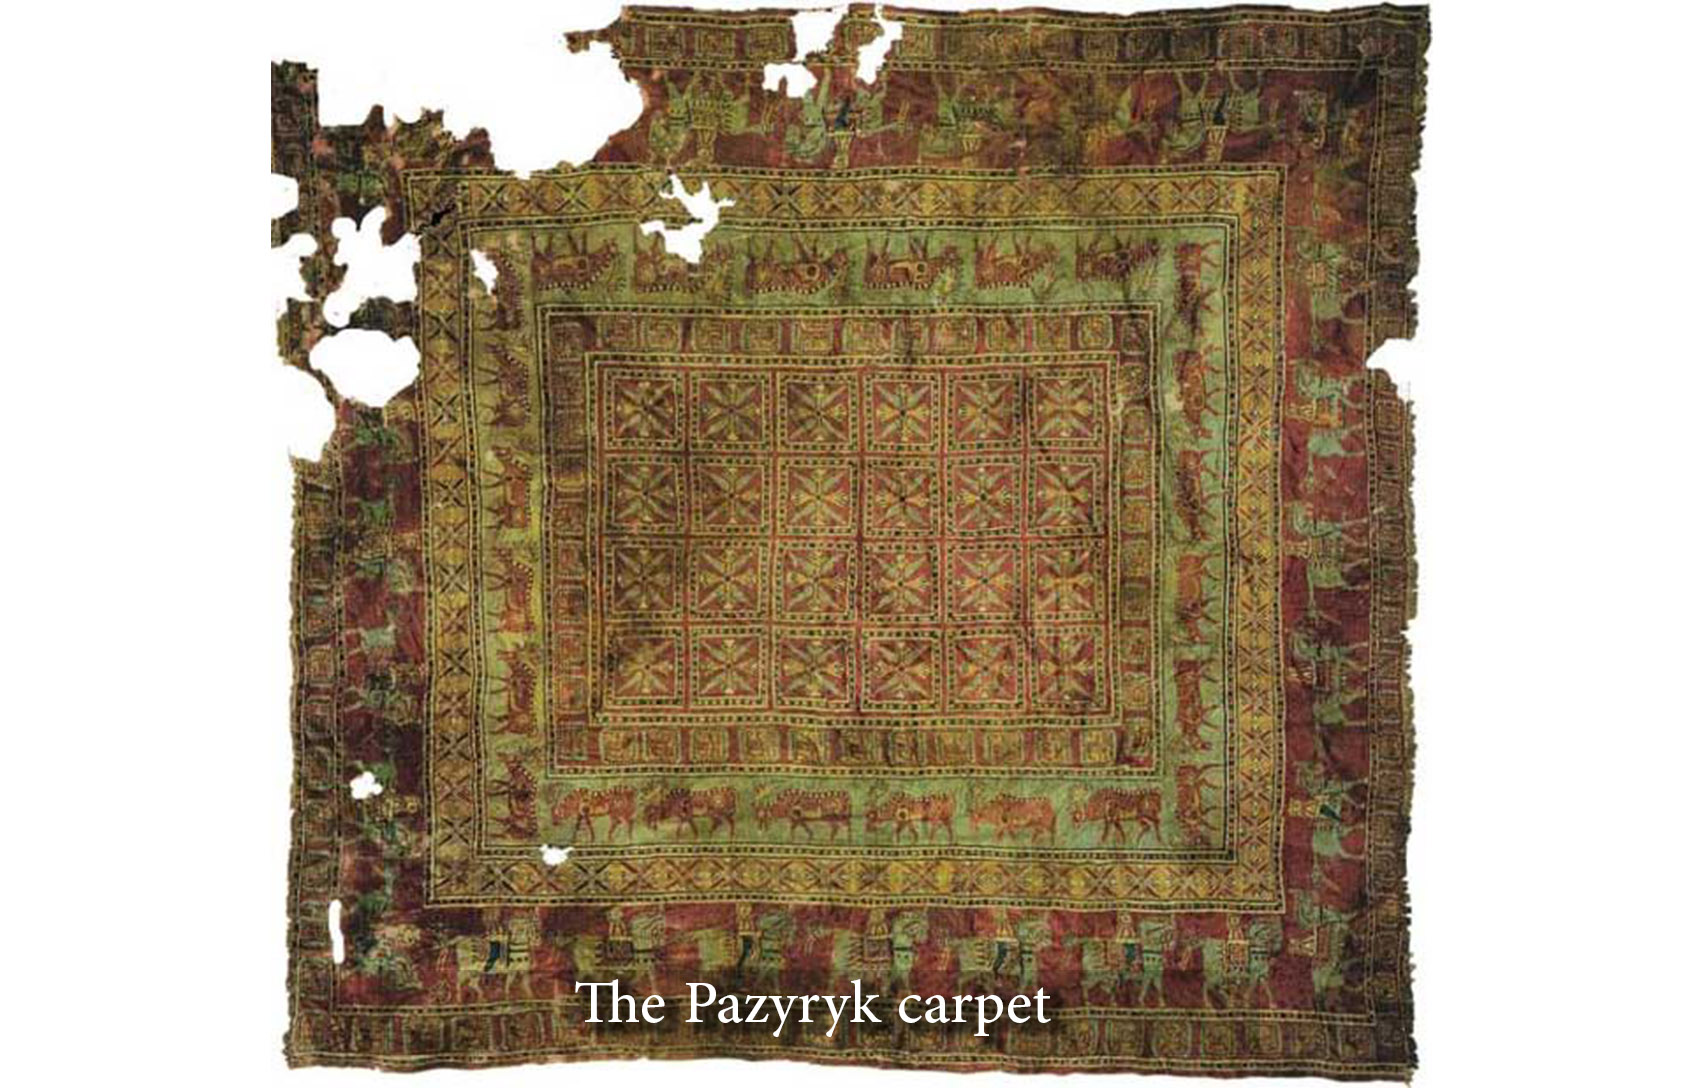 The Pazyryk carpet